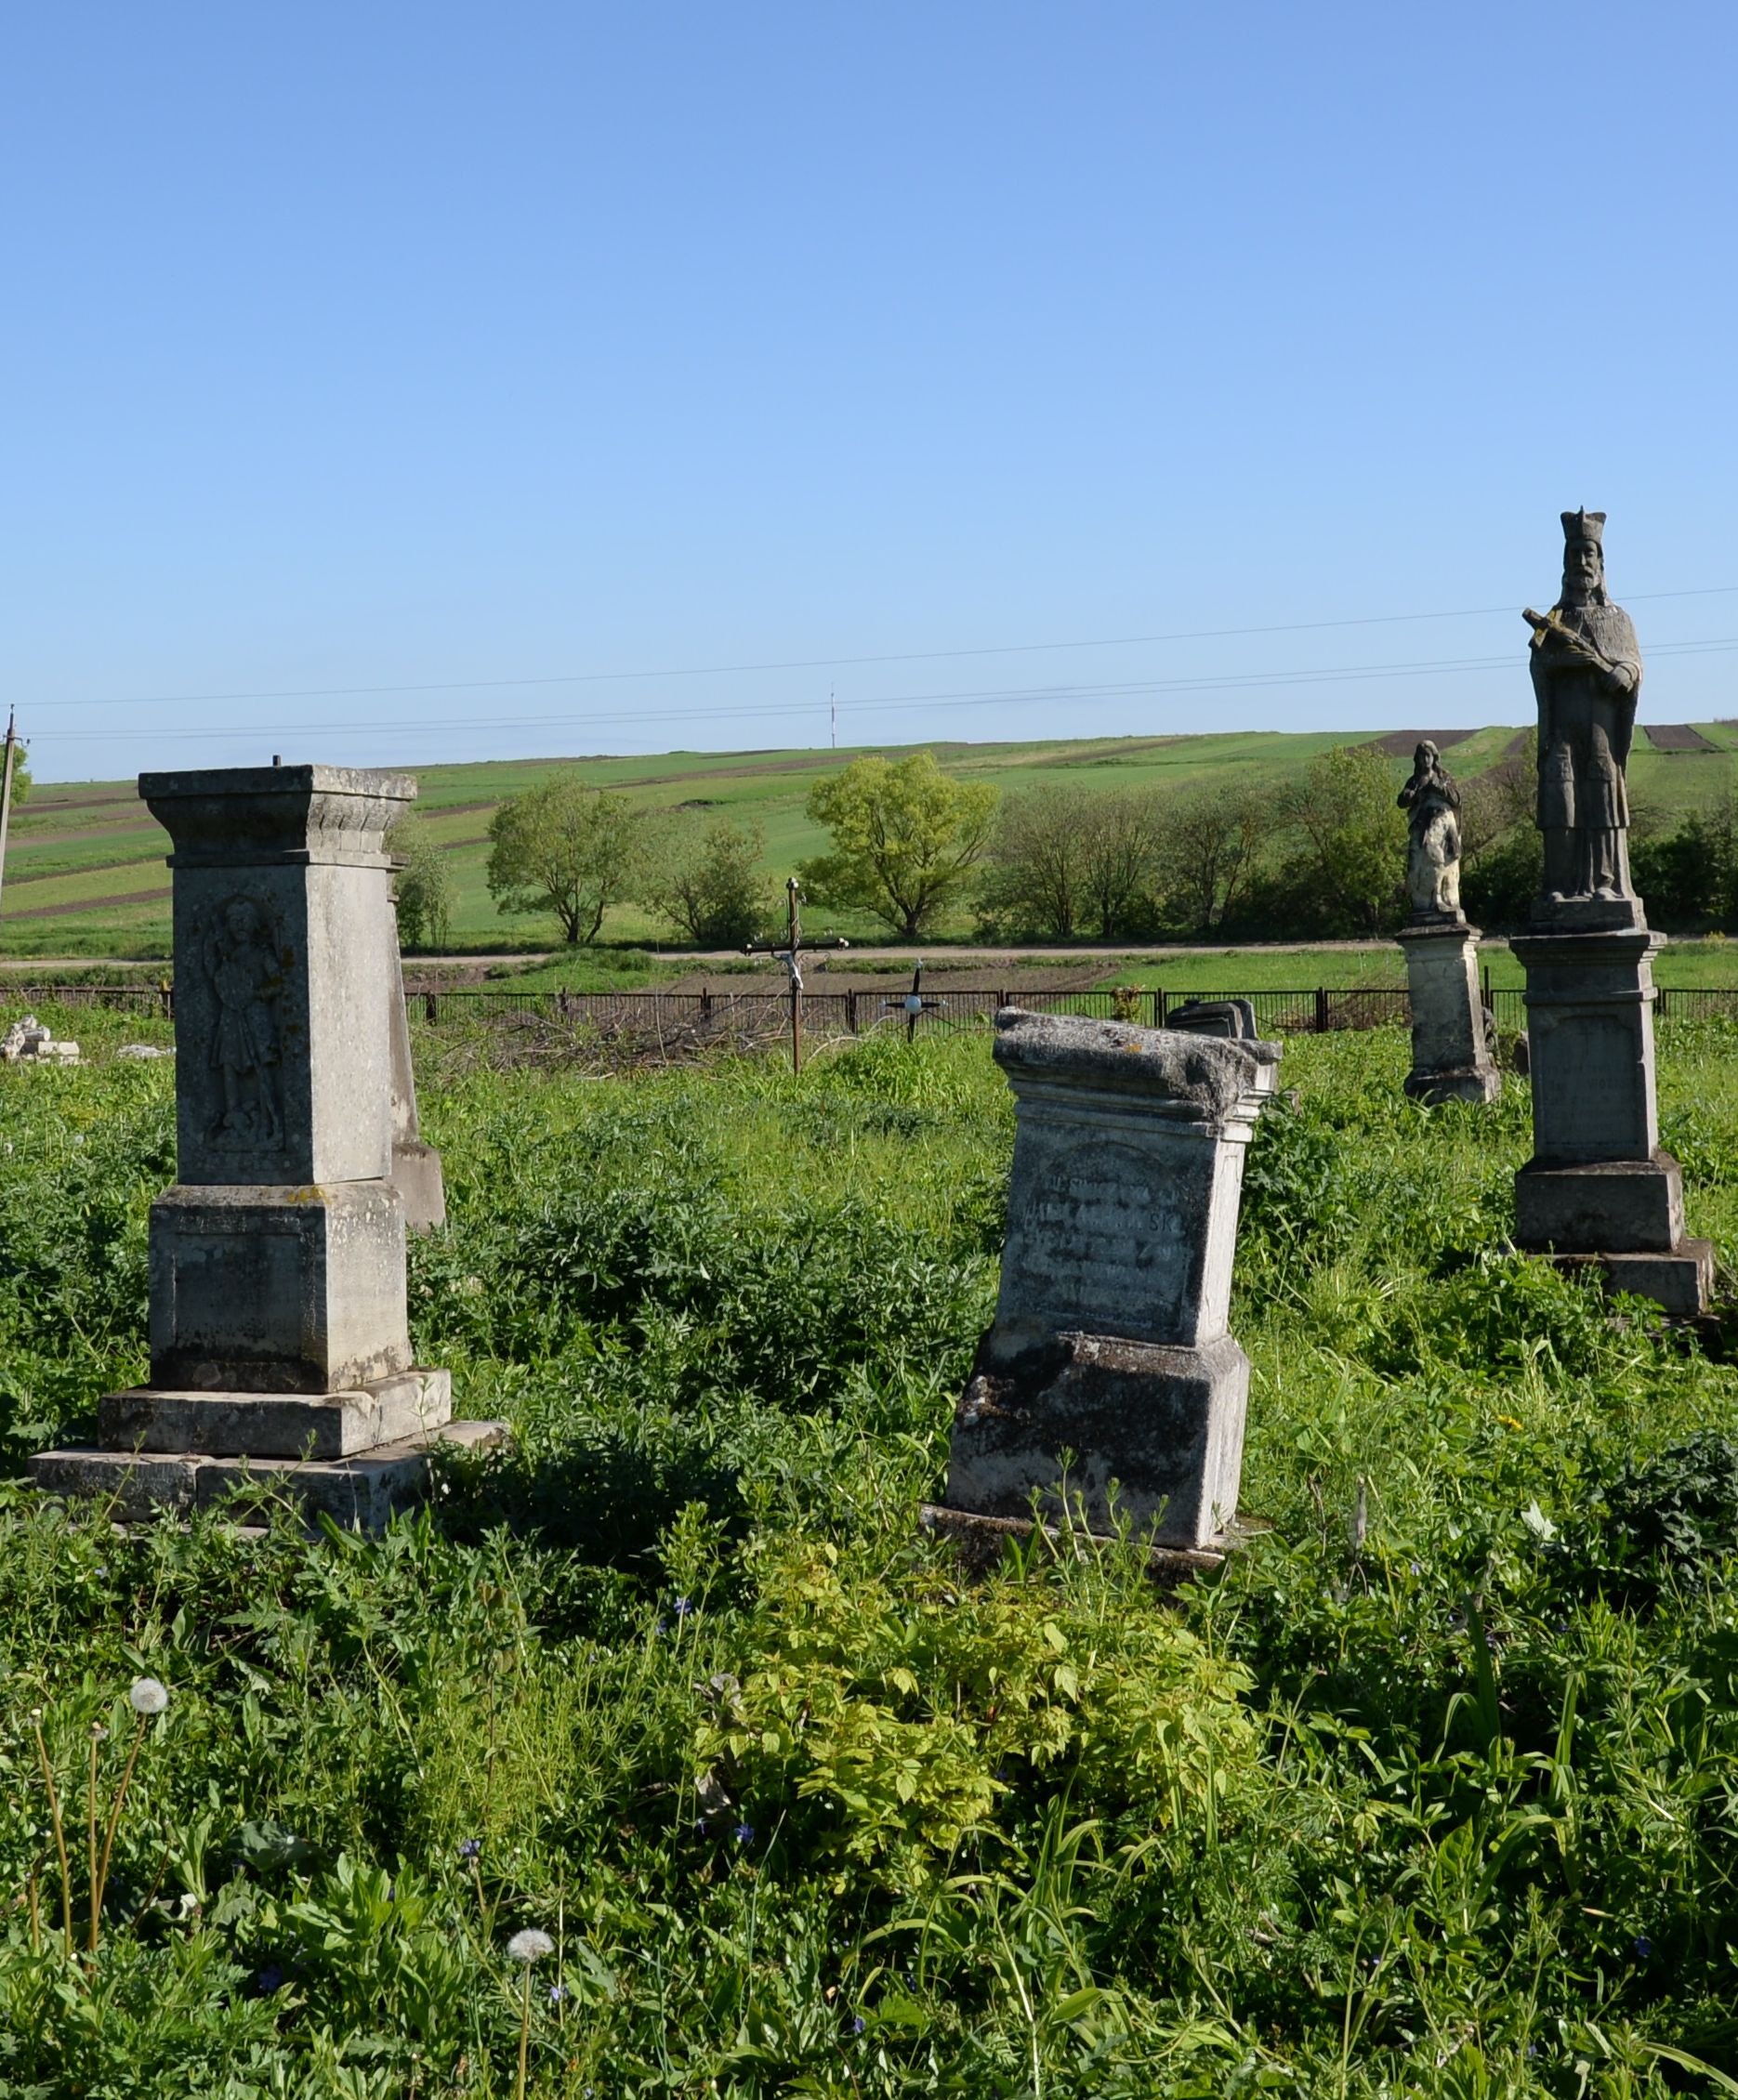 Bajkowce cemetery